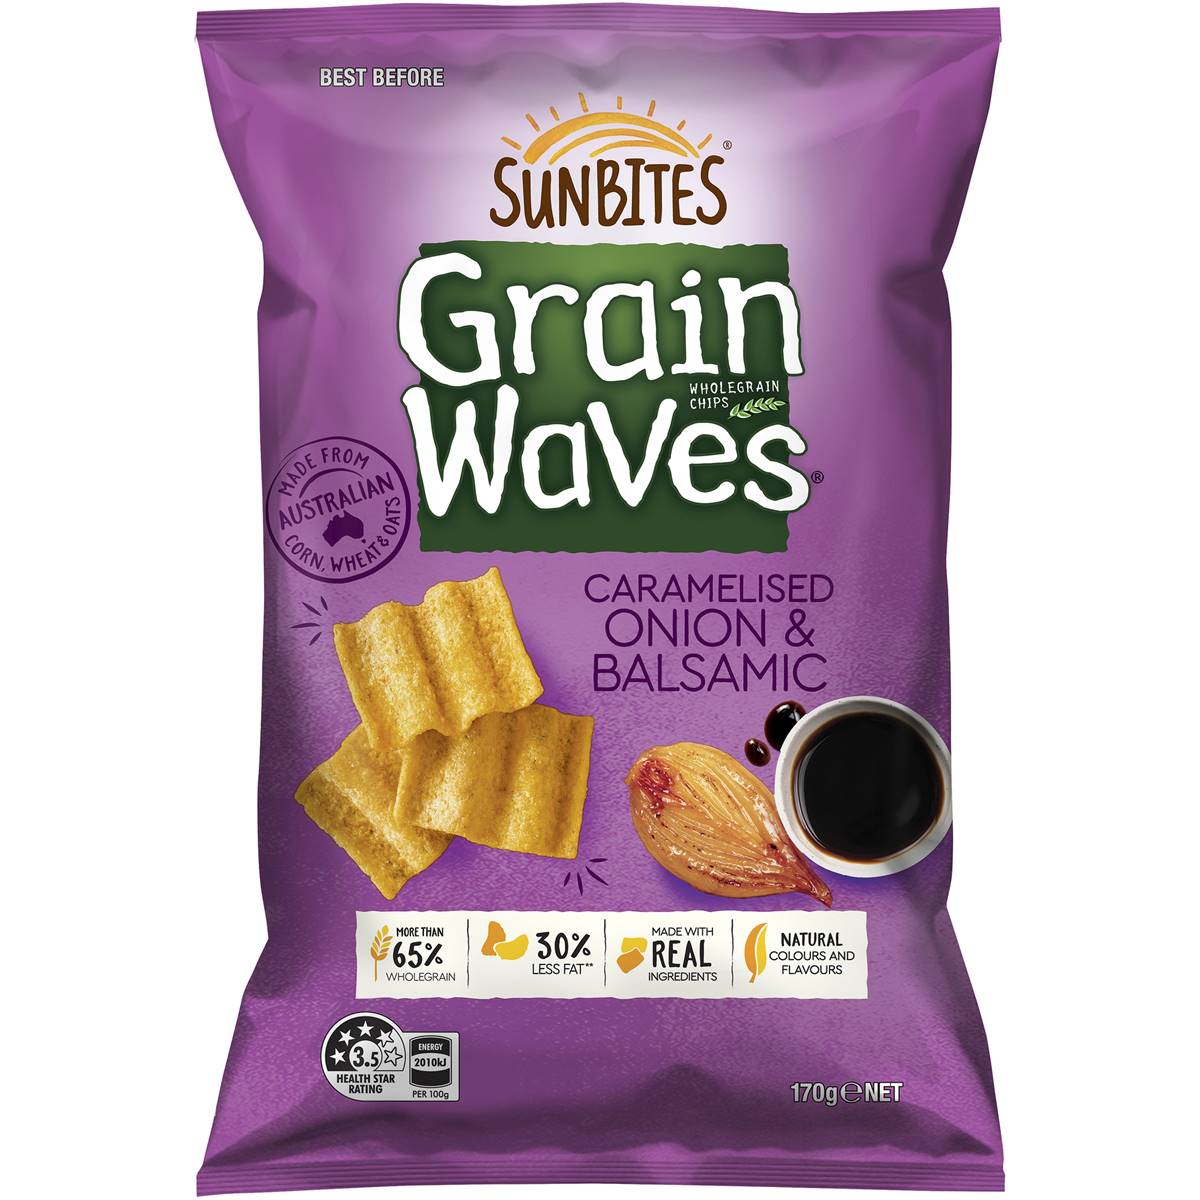 Calories in Sunbites Grain Waves Wholegrain Chips Caramelised Onion & Balsamic